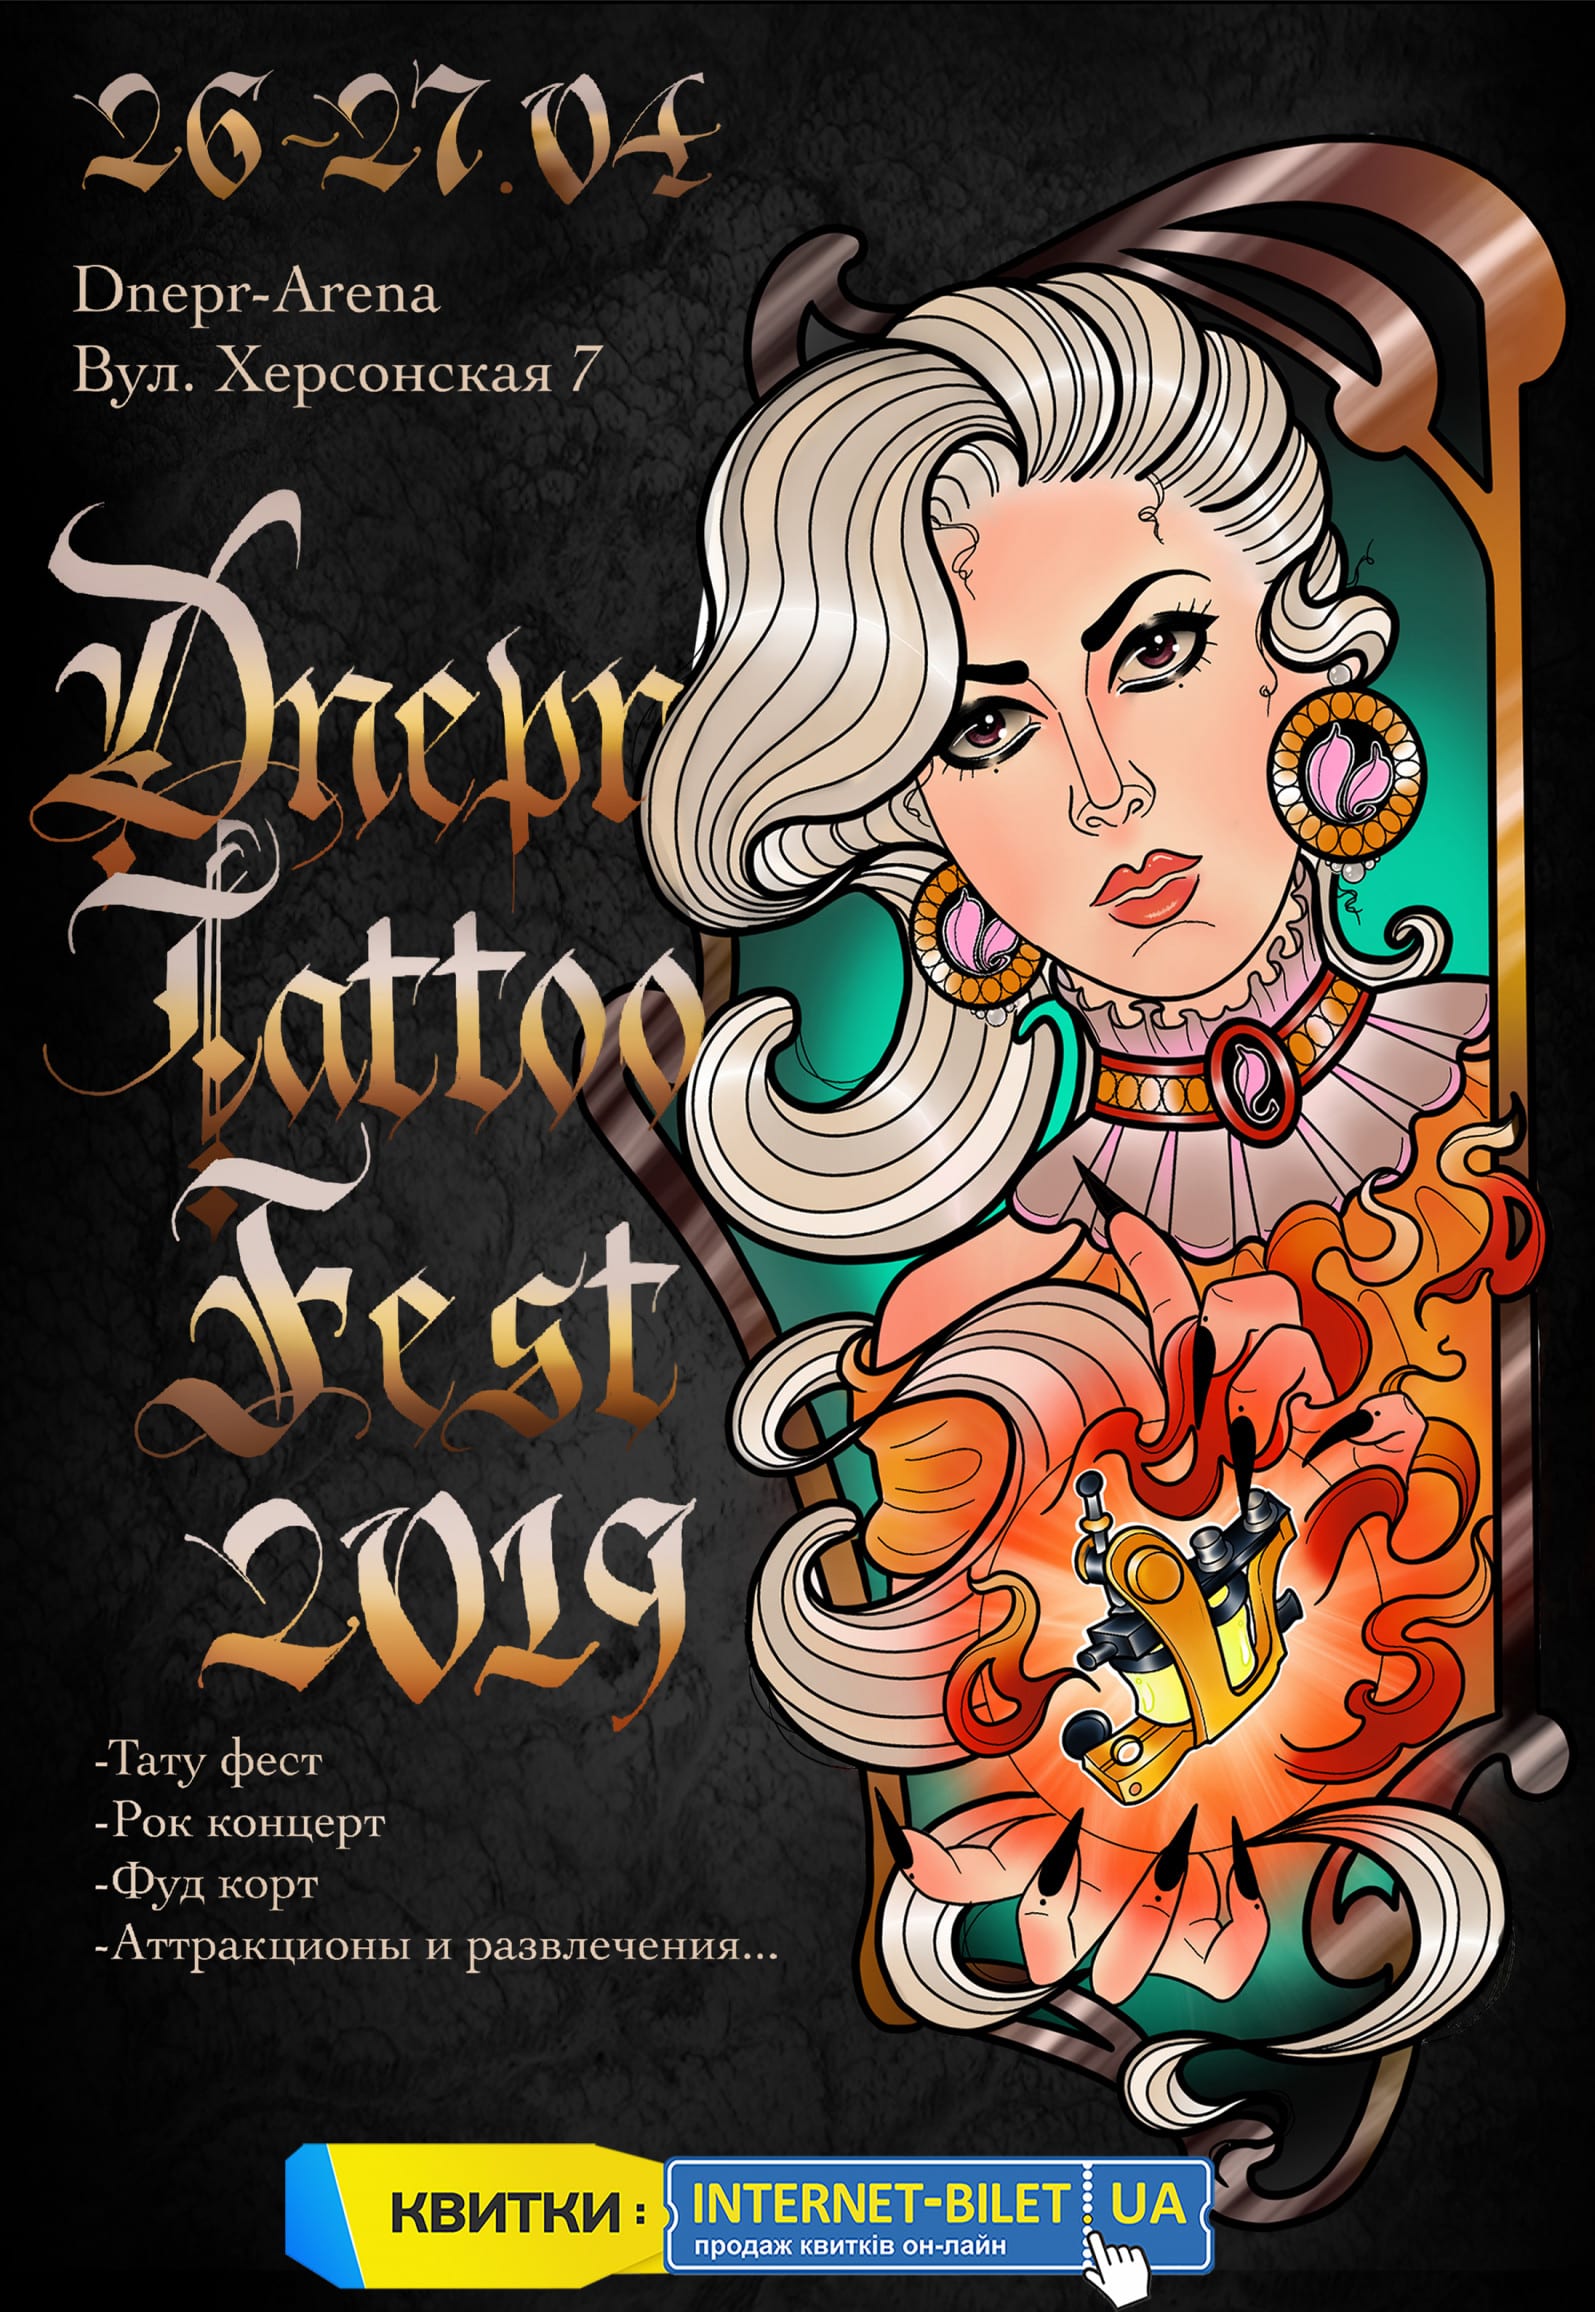 Dnepr Tattoo Fest 2019 Днепр, 26.04.2019, купить билеты, цена, дата. Афиша Днепра